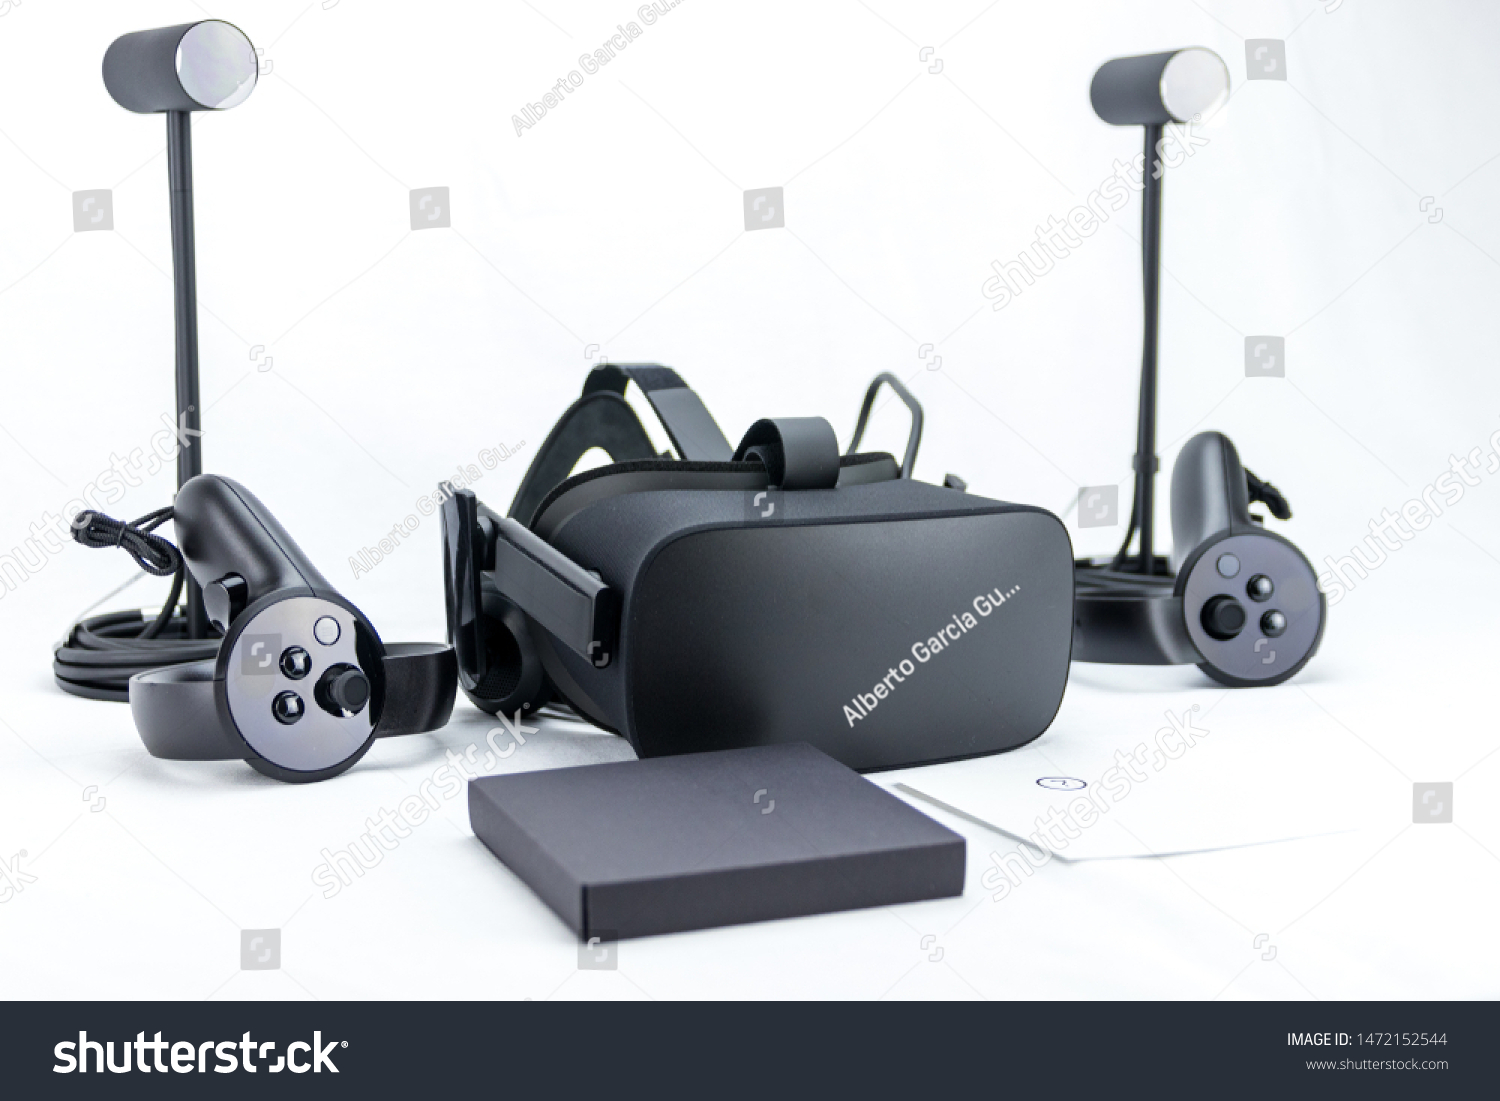 Oculus Rift Sensor for Oculus RIFT CV1 Virtual Reality Headset Free Delivery 